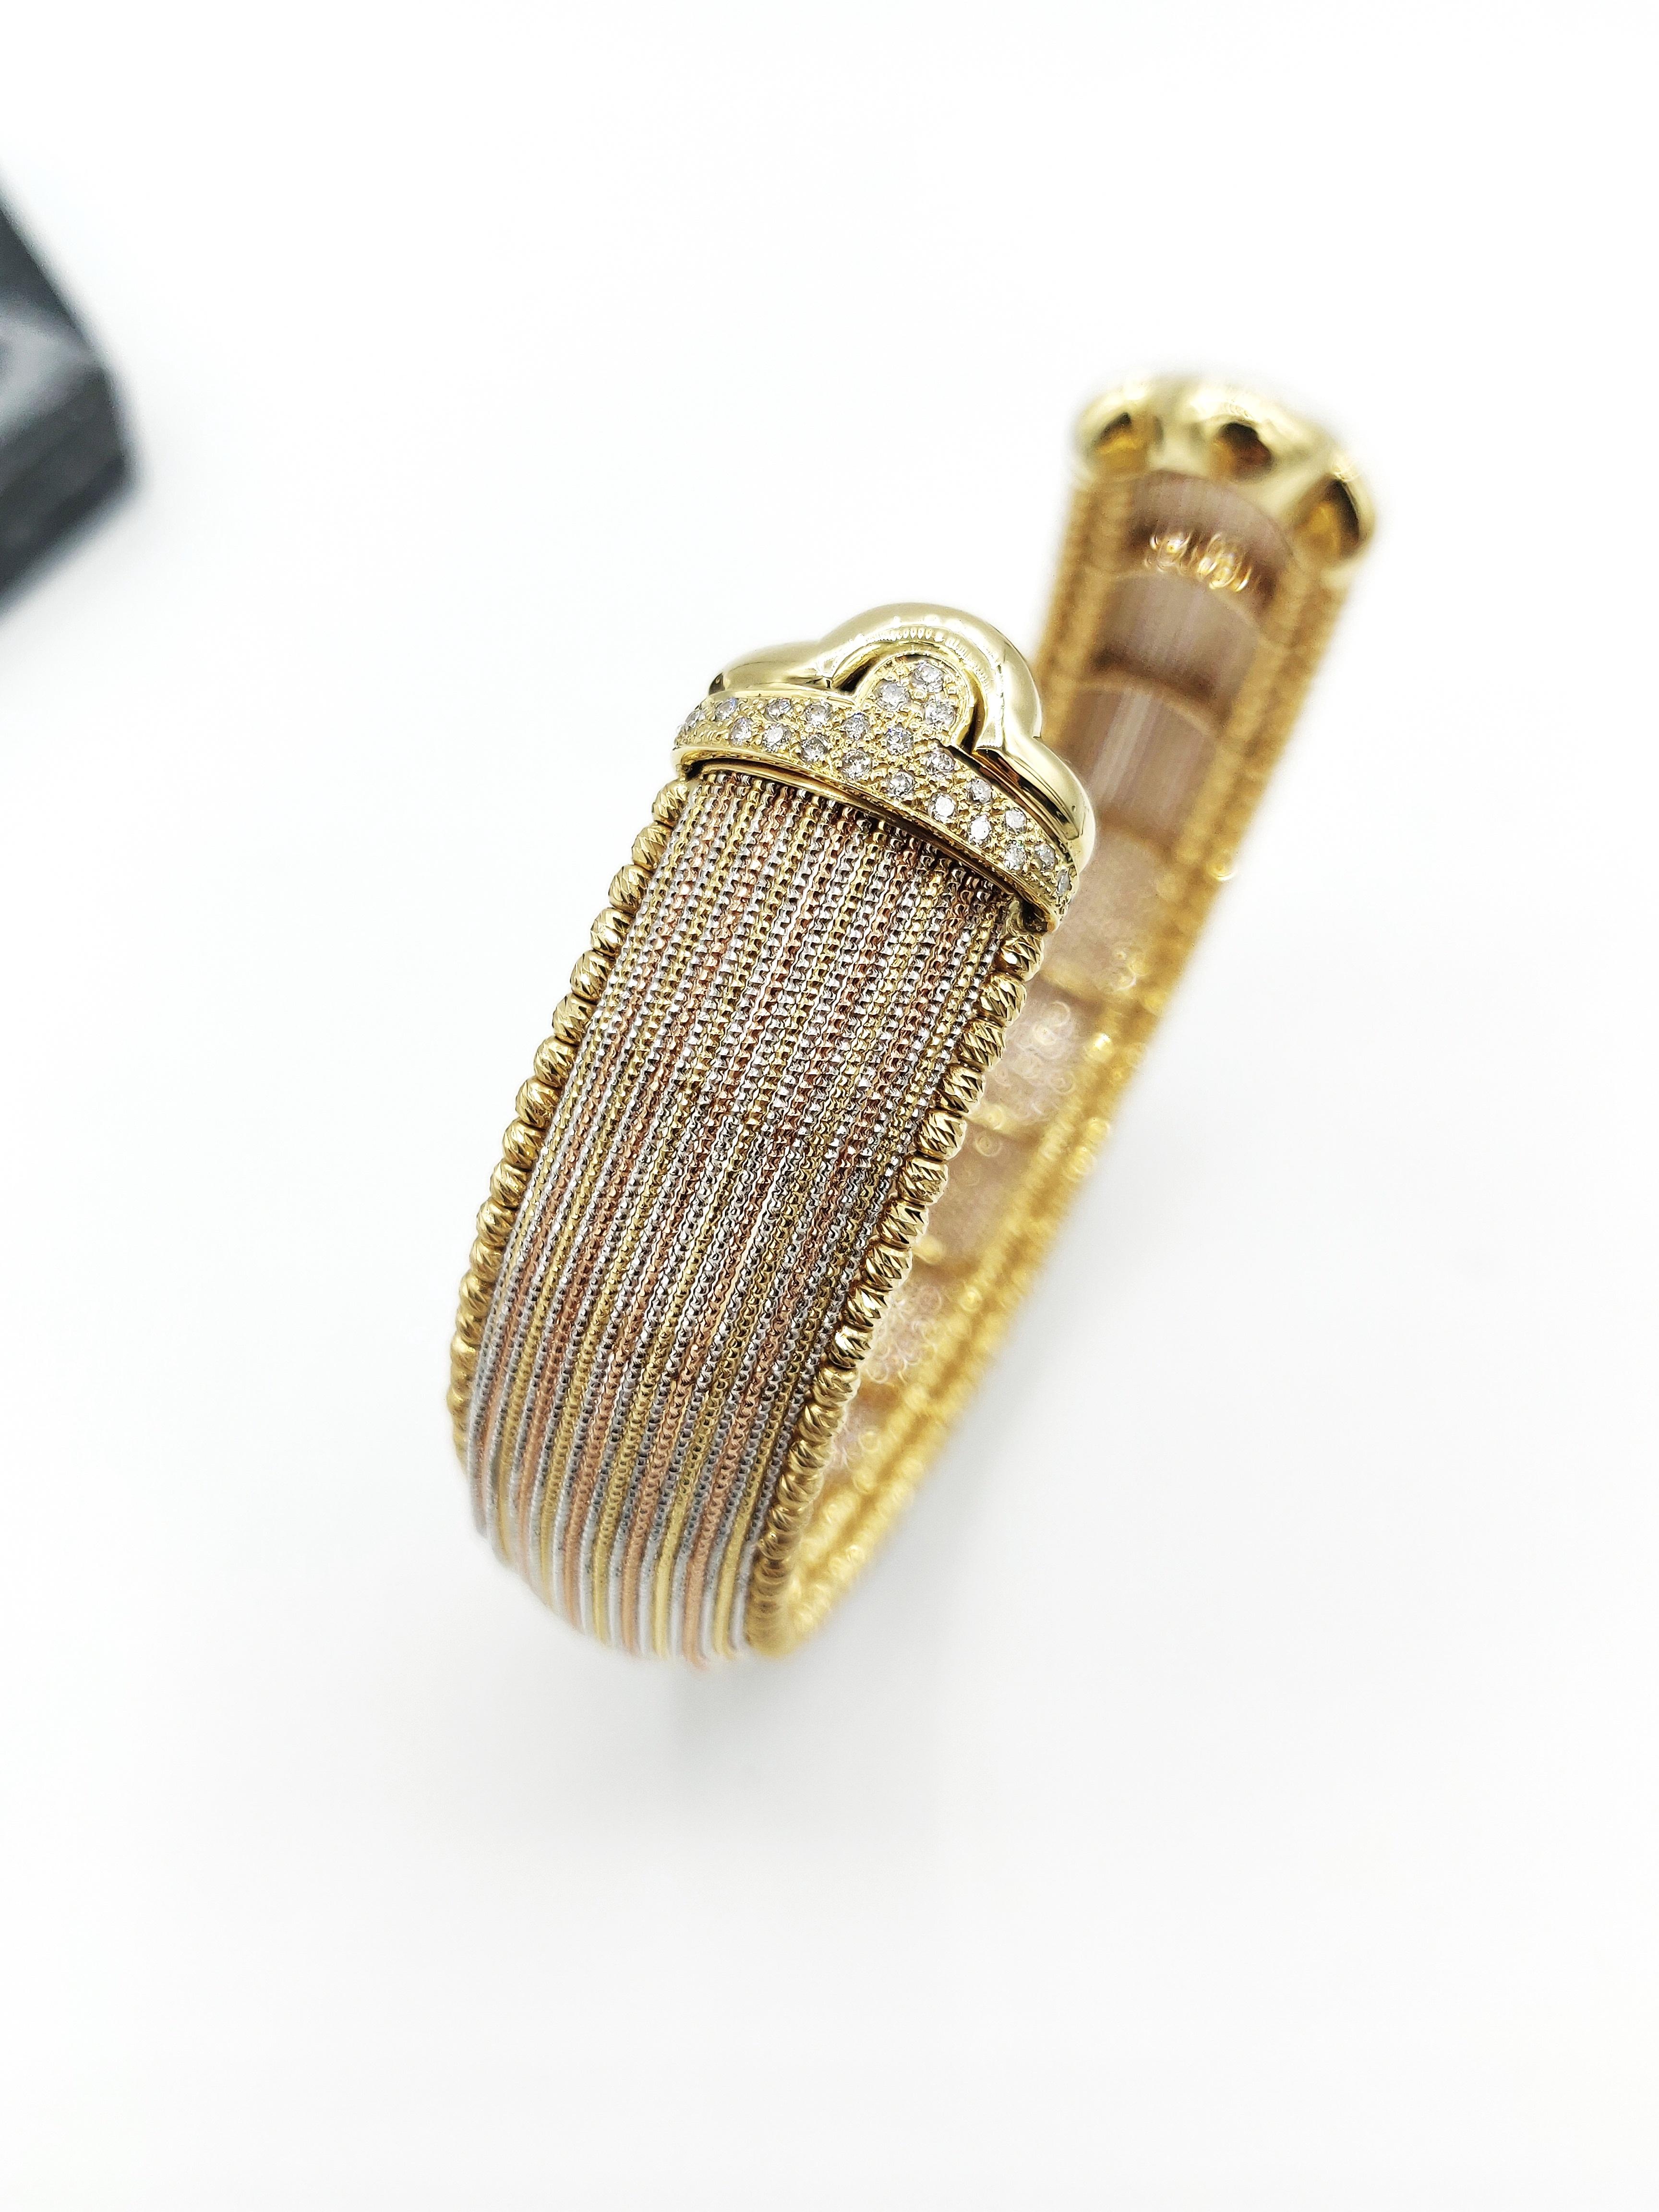 Silk Thread Effect Tri-Colour 18 Karat Gold Open Bangle with Diamond End Caps

Gold: 18K 41.263g.
Diamond: 0.35ct.